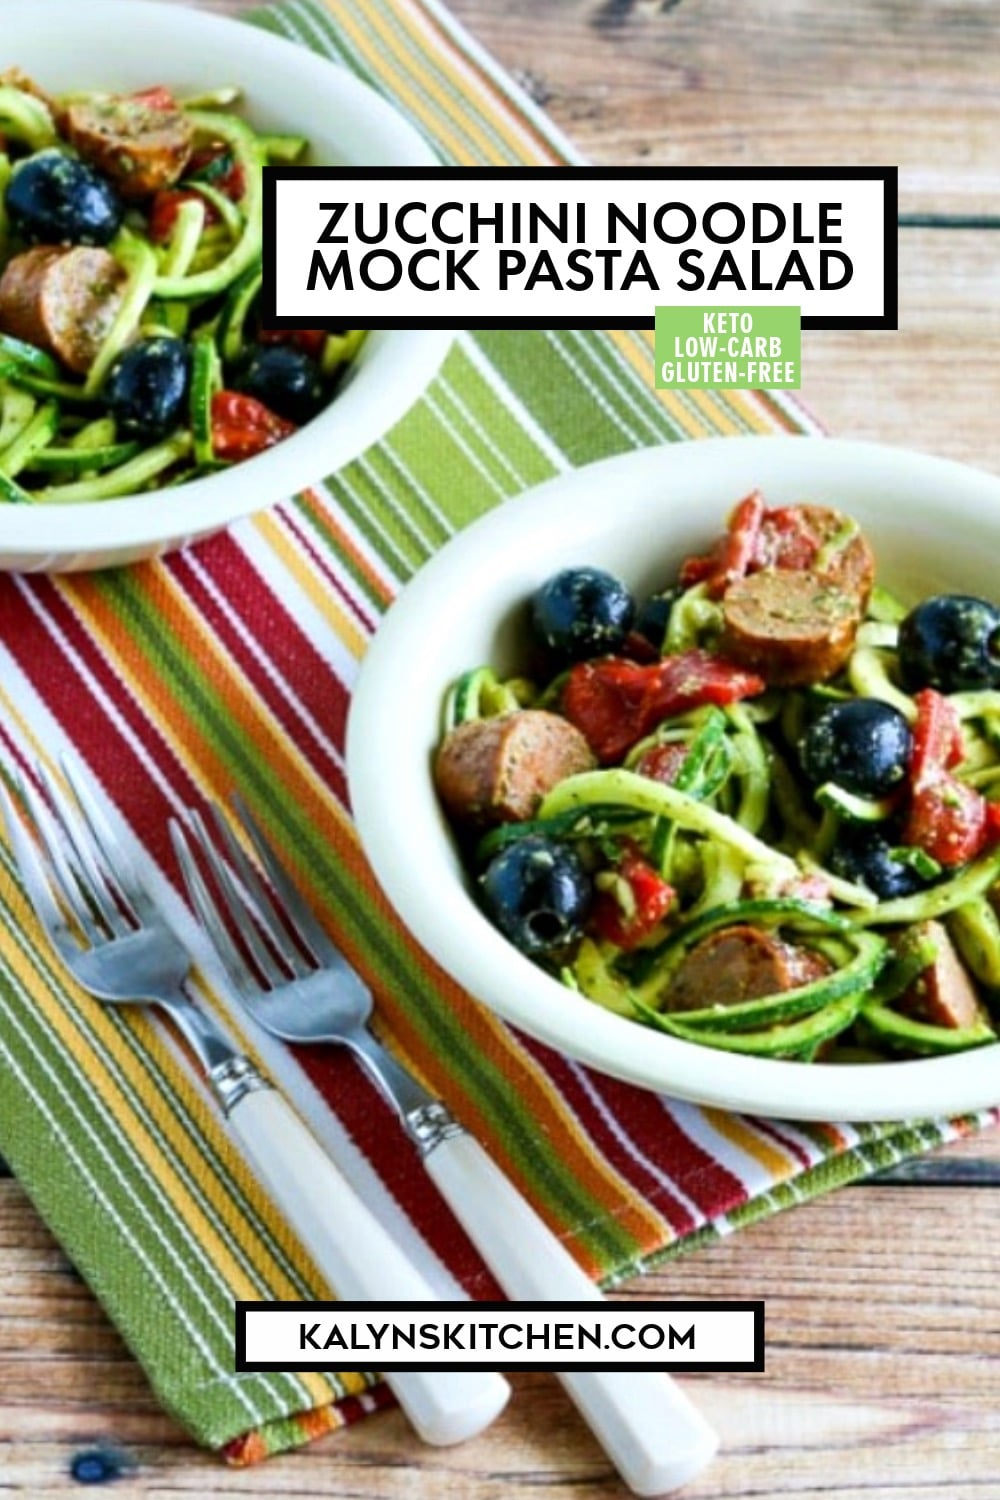 Pinterest image of Zucchini Noodle Mock Pasta Salad